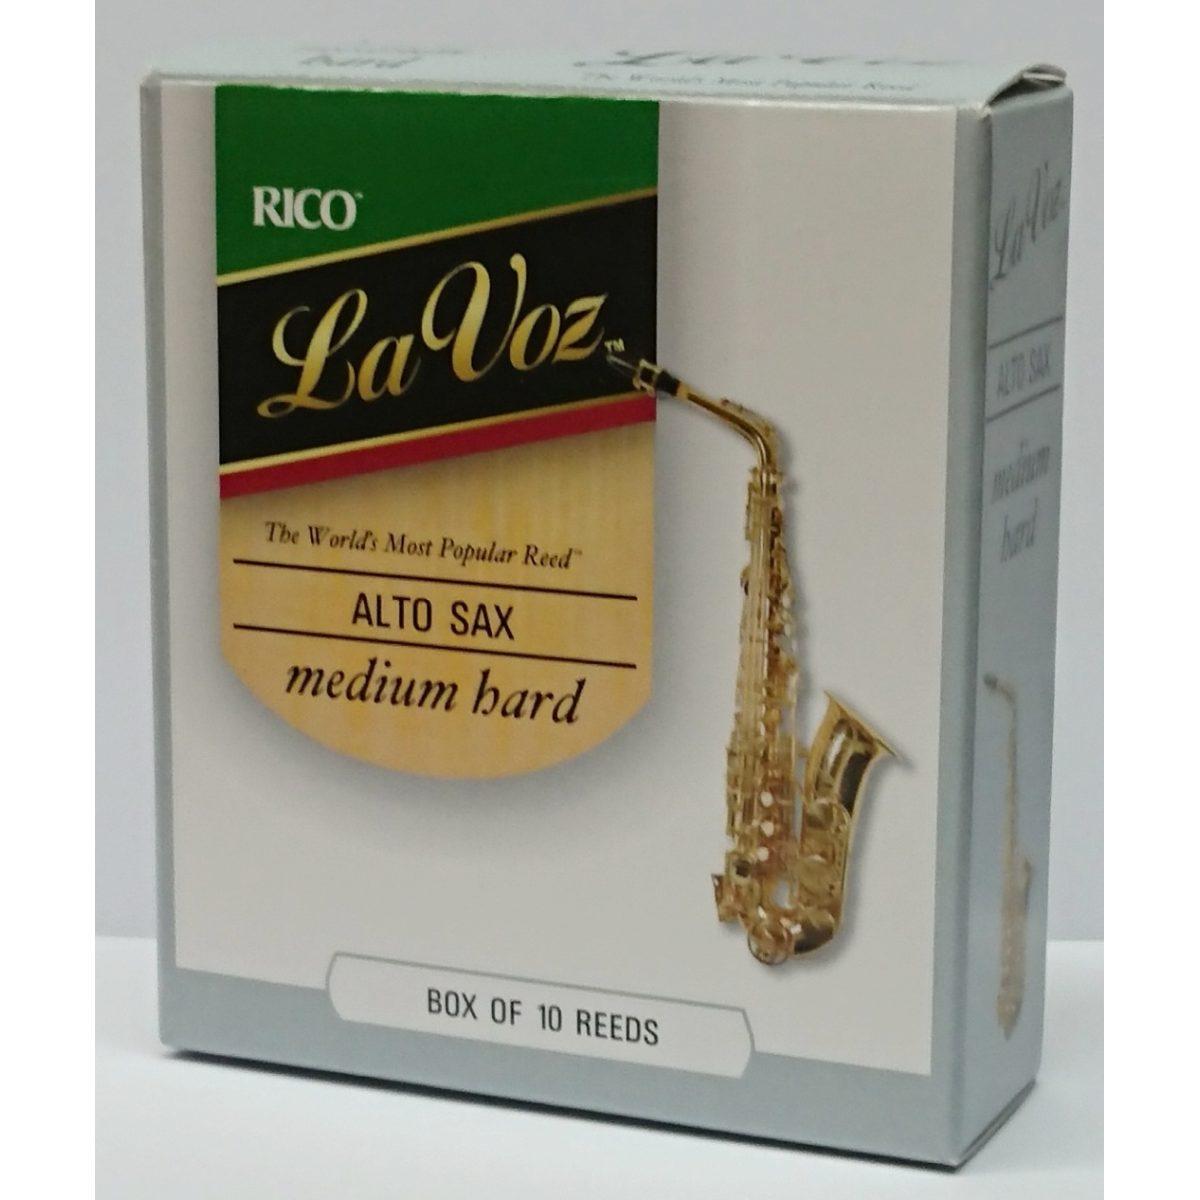 Rico La Voz ancia sax alto, medium hard